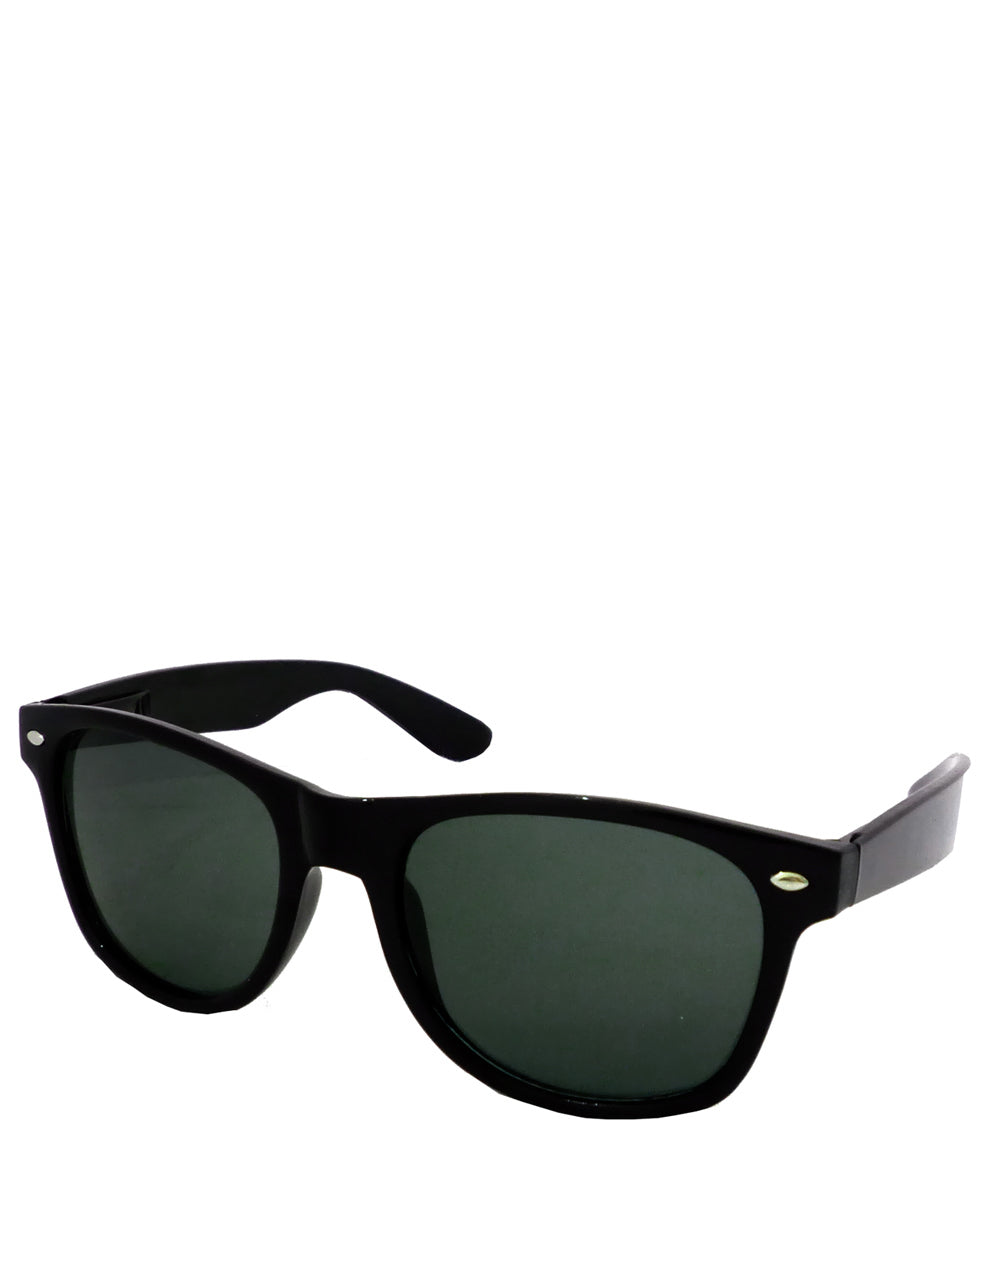 American Pysch C. Bale Style Sunglasses, Black Frame / Smoke Lens